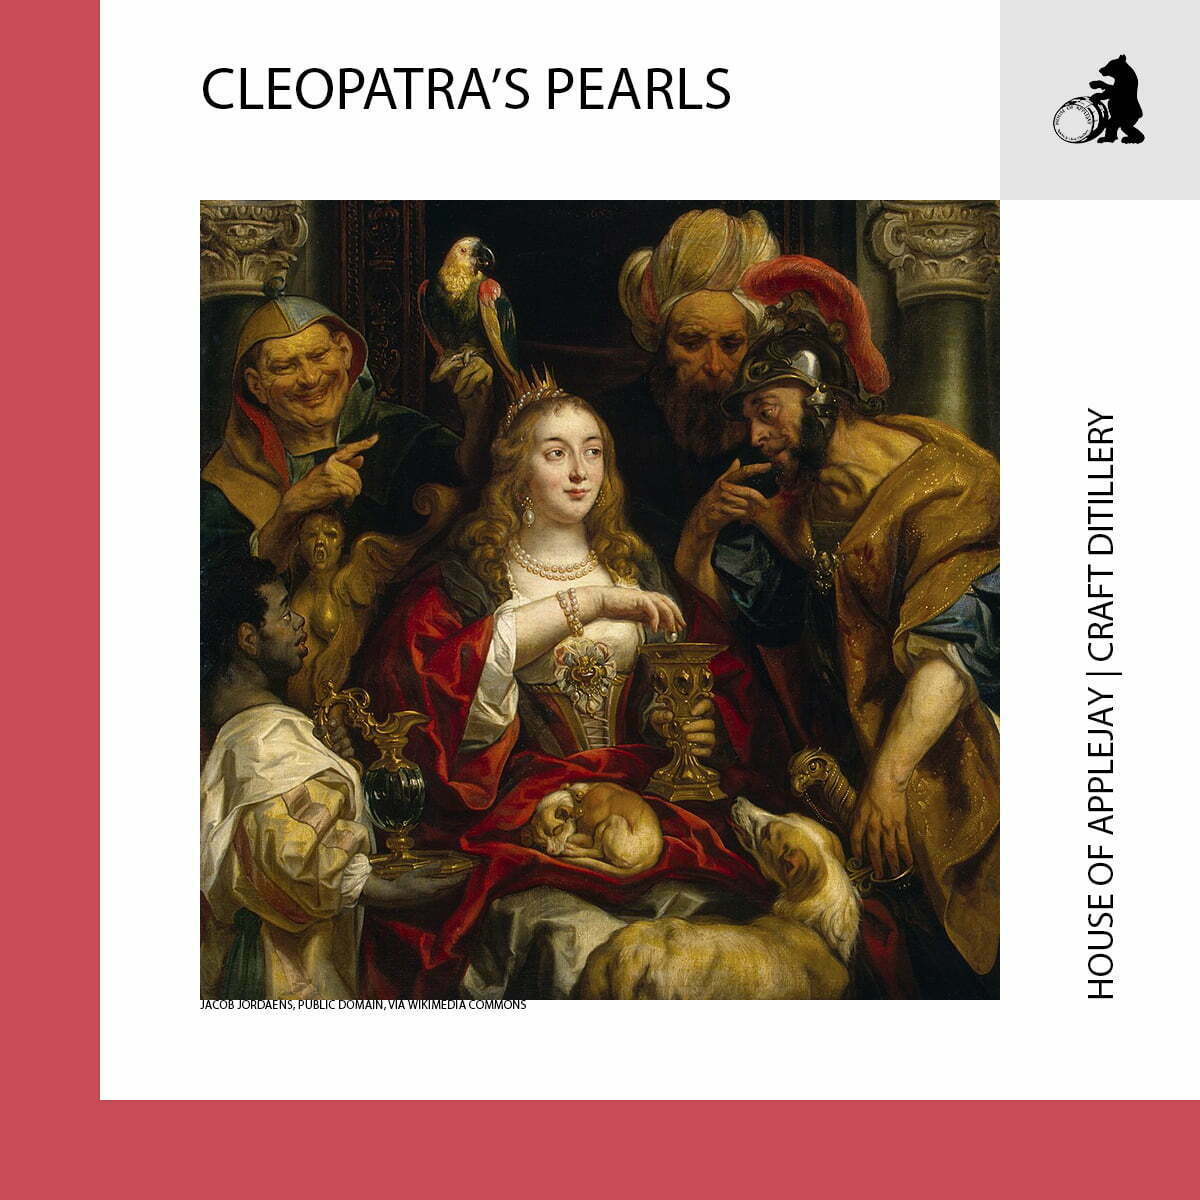 CleopatrasPearls